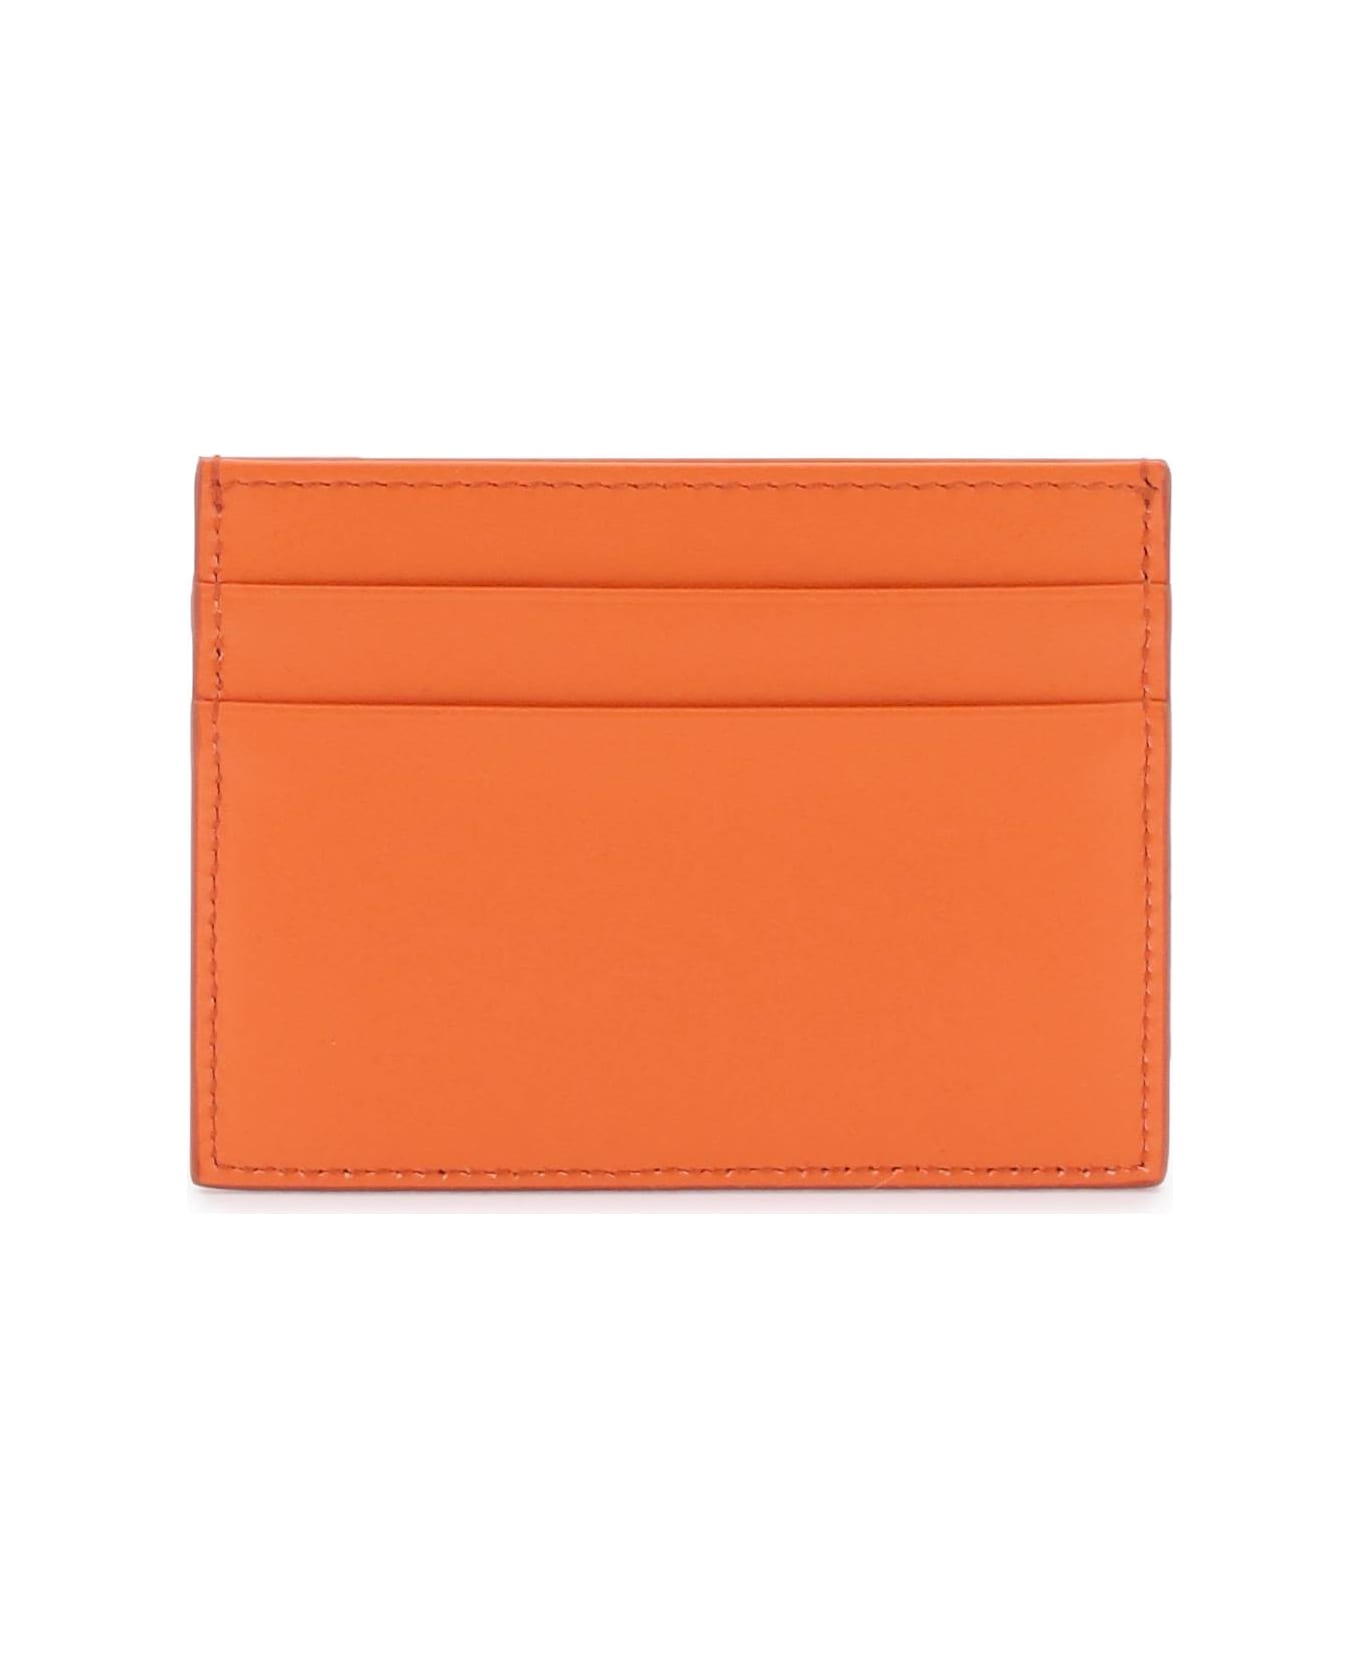 Dolce & Gabbana Leather Card Holder - ARANCIO (Orange) 財布